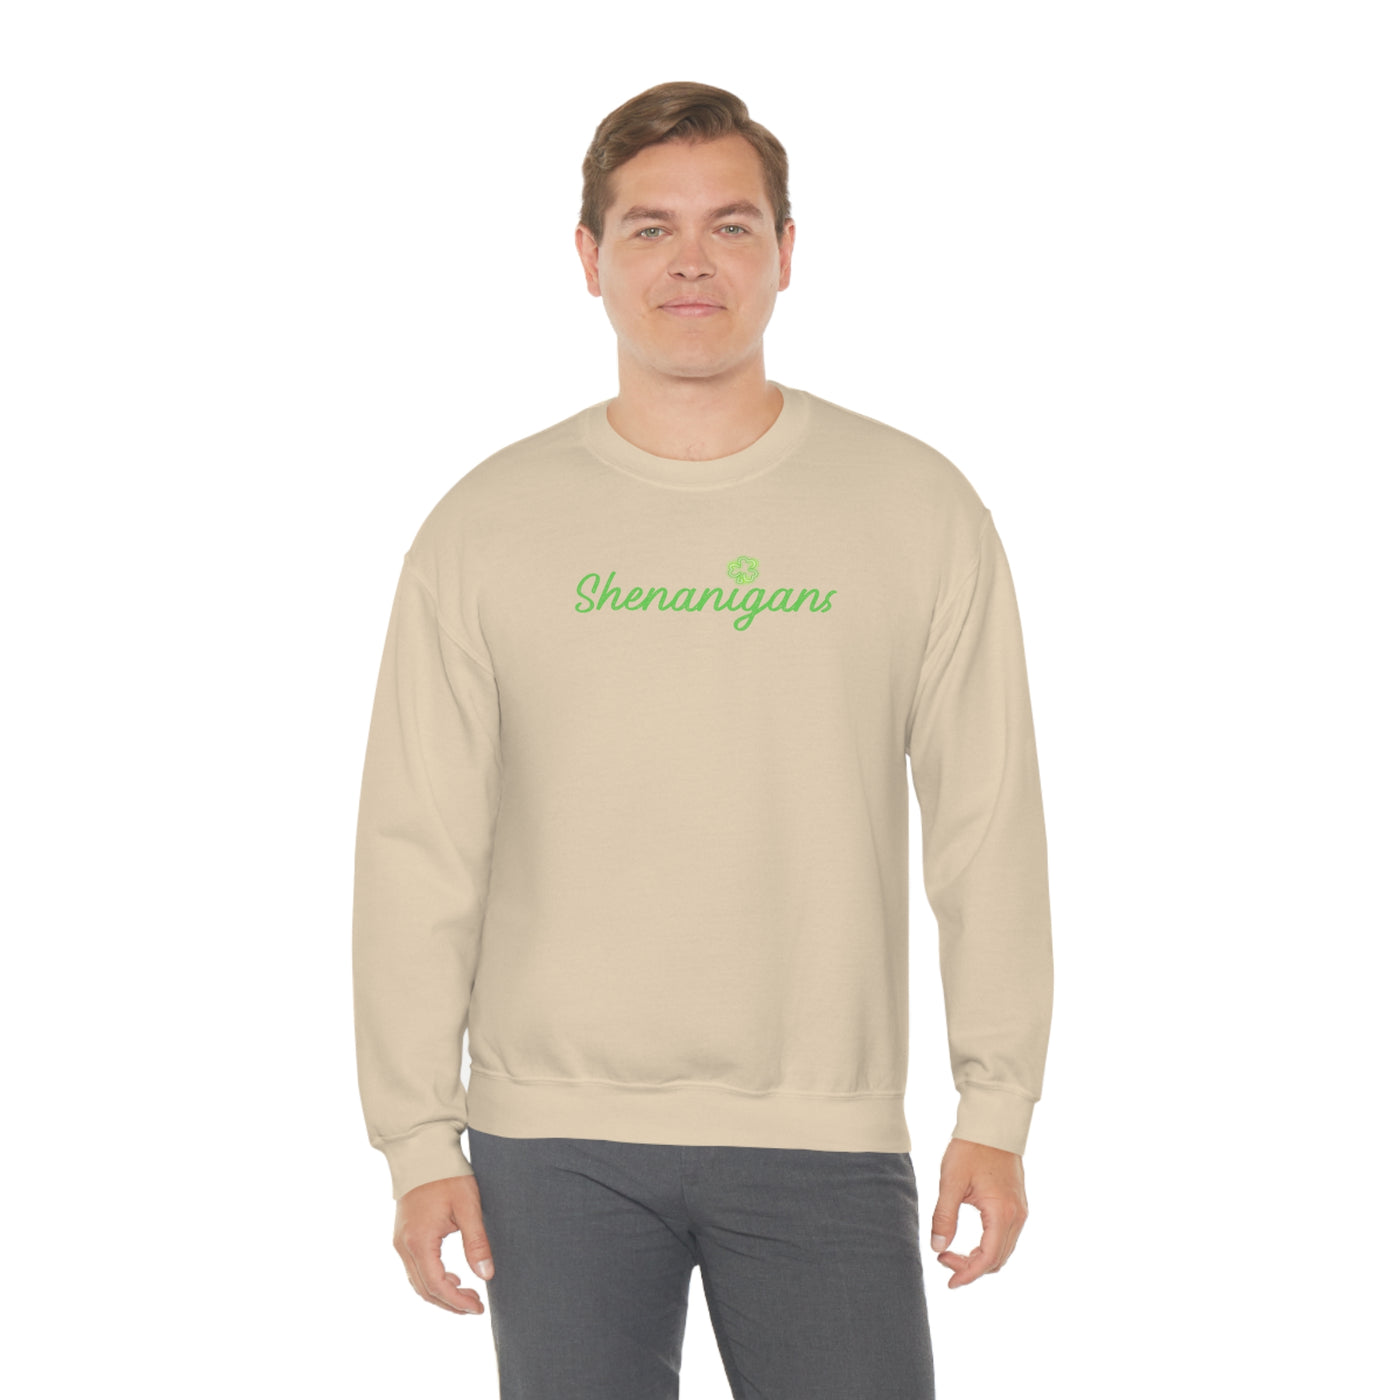 Shenanigans Crewneck Sweatshirt